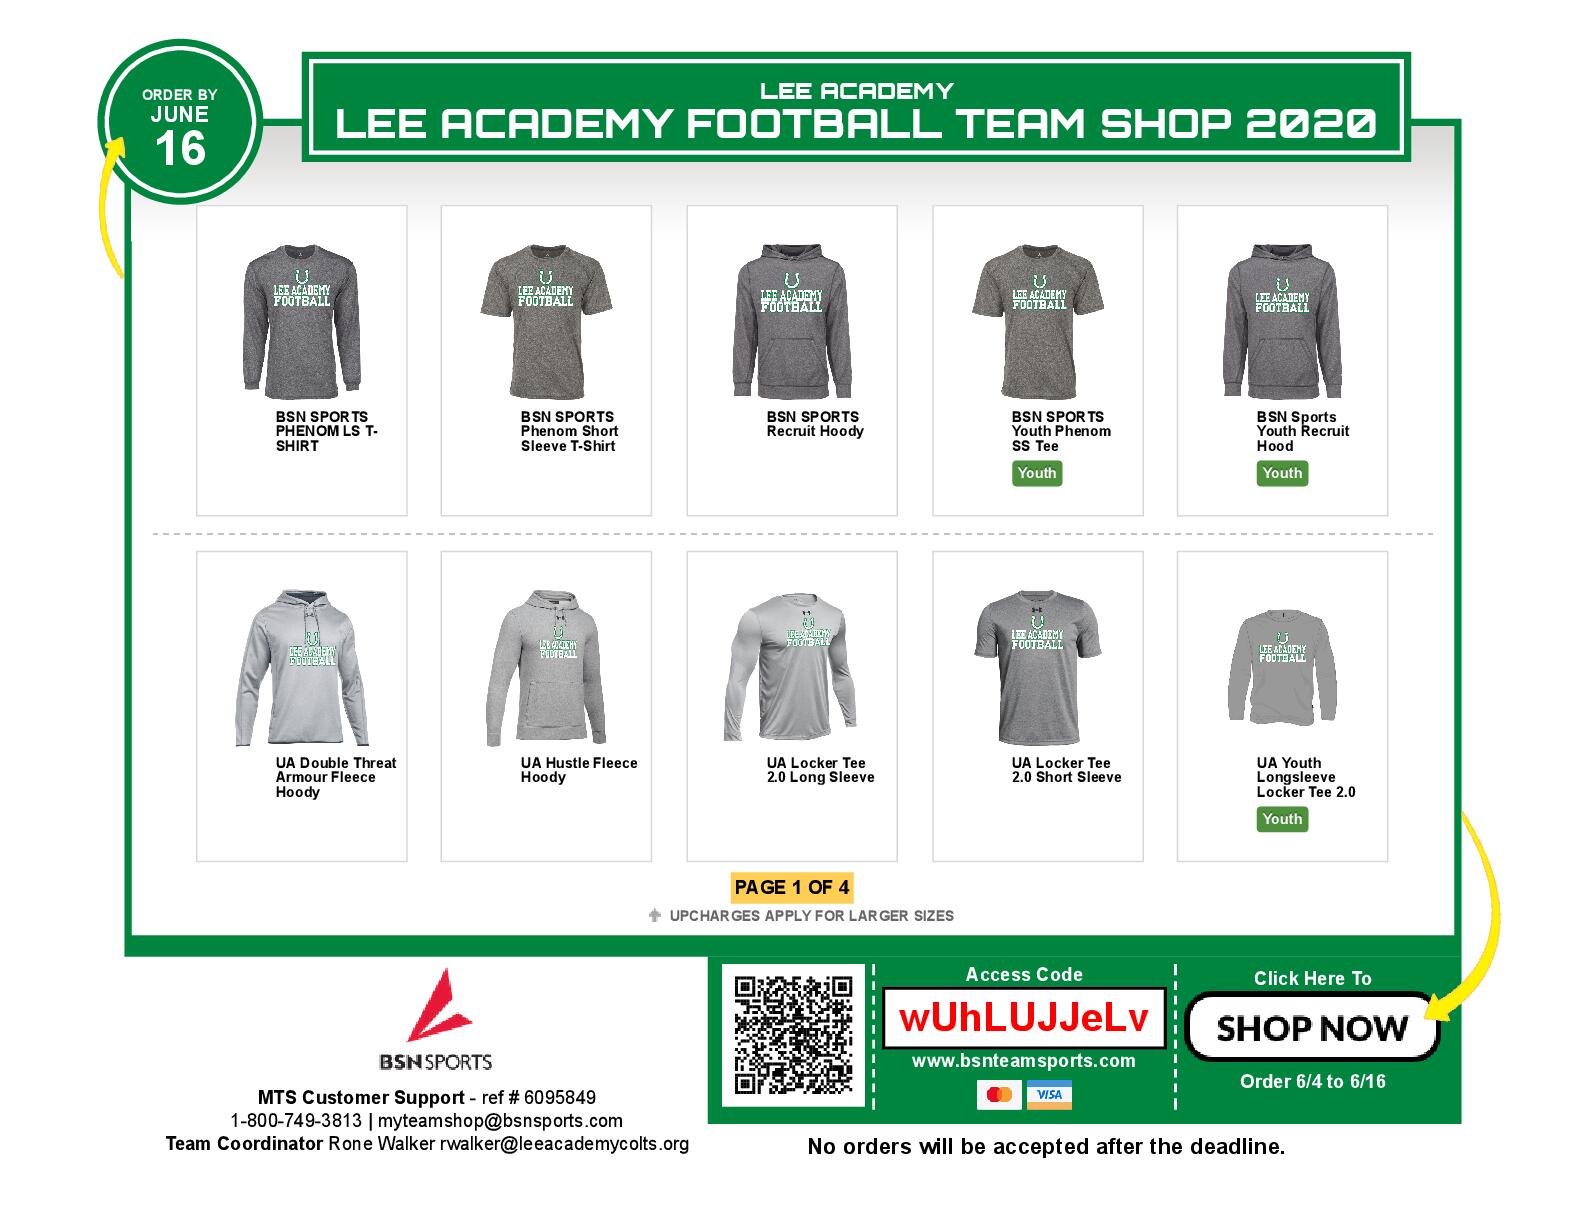 Lee Academy Football Team Shop 2020 Flyer